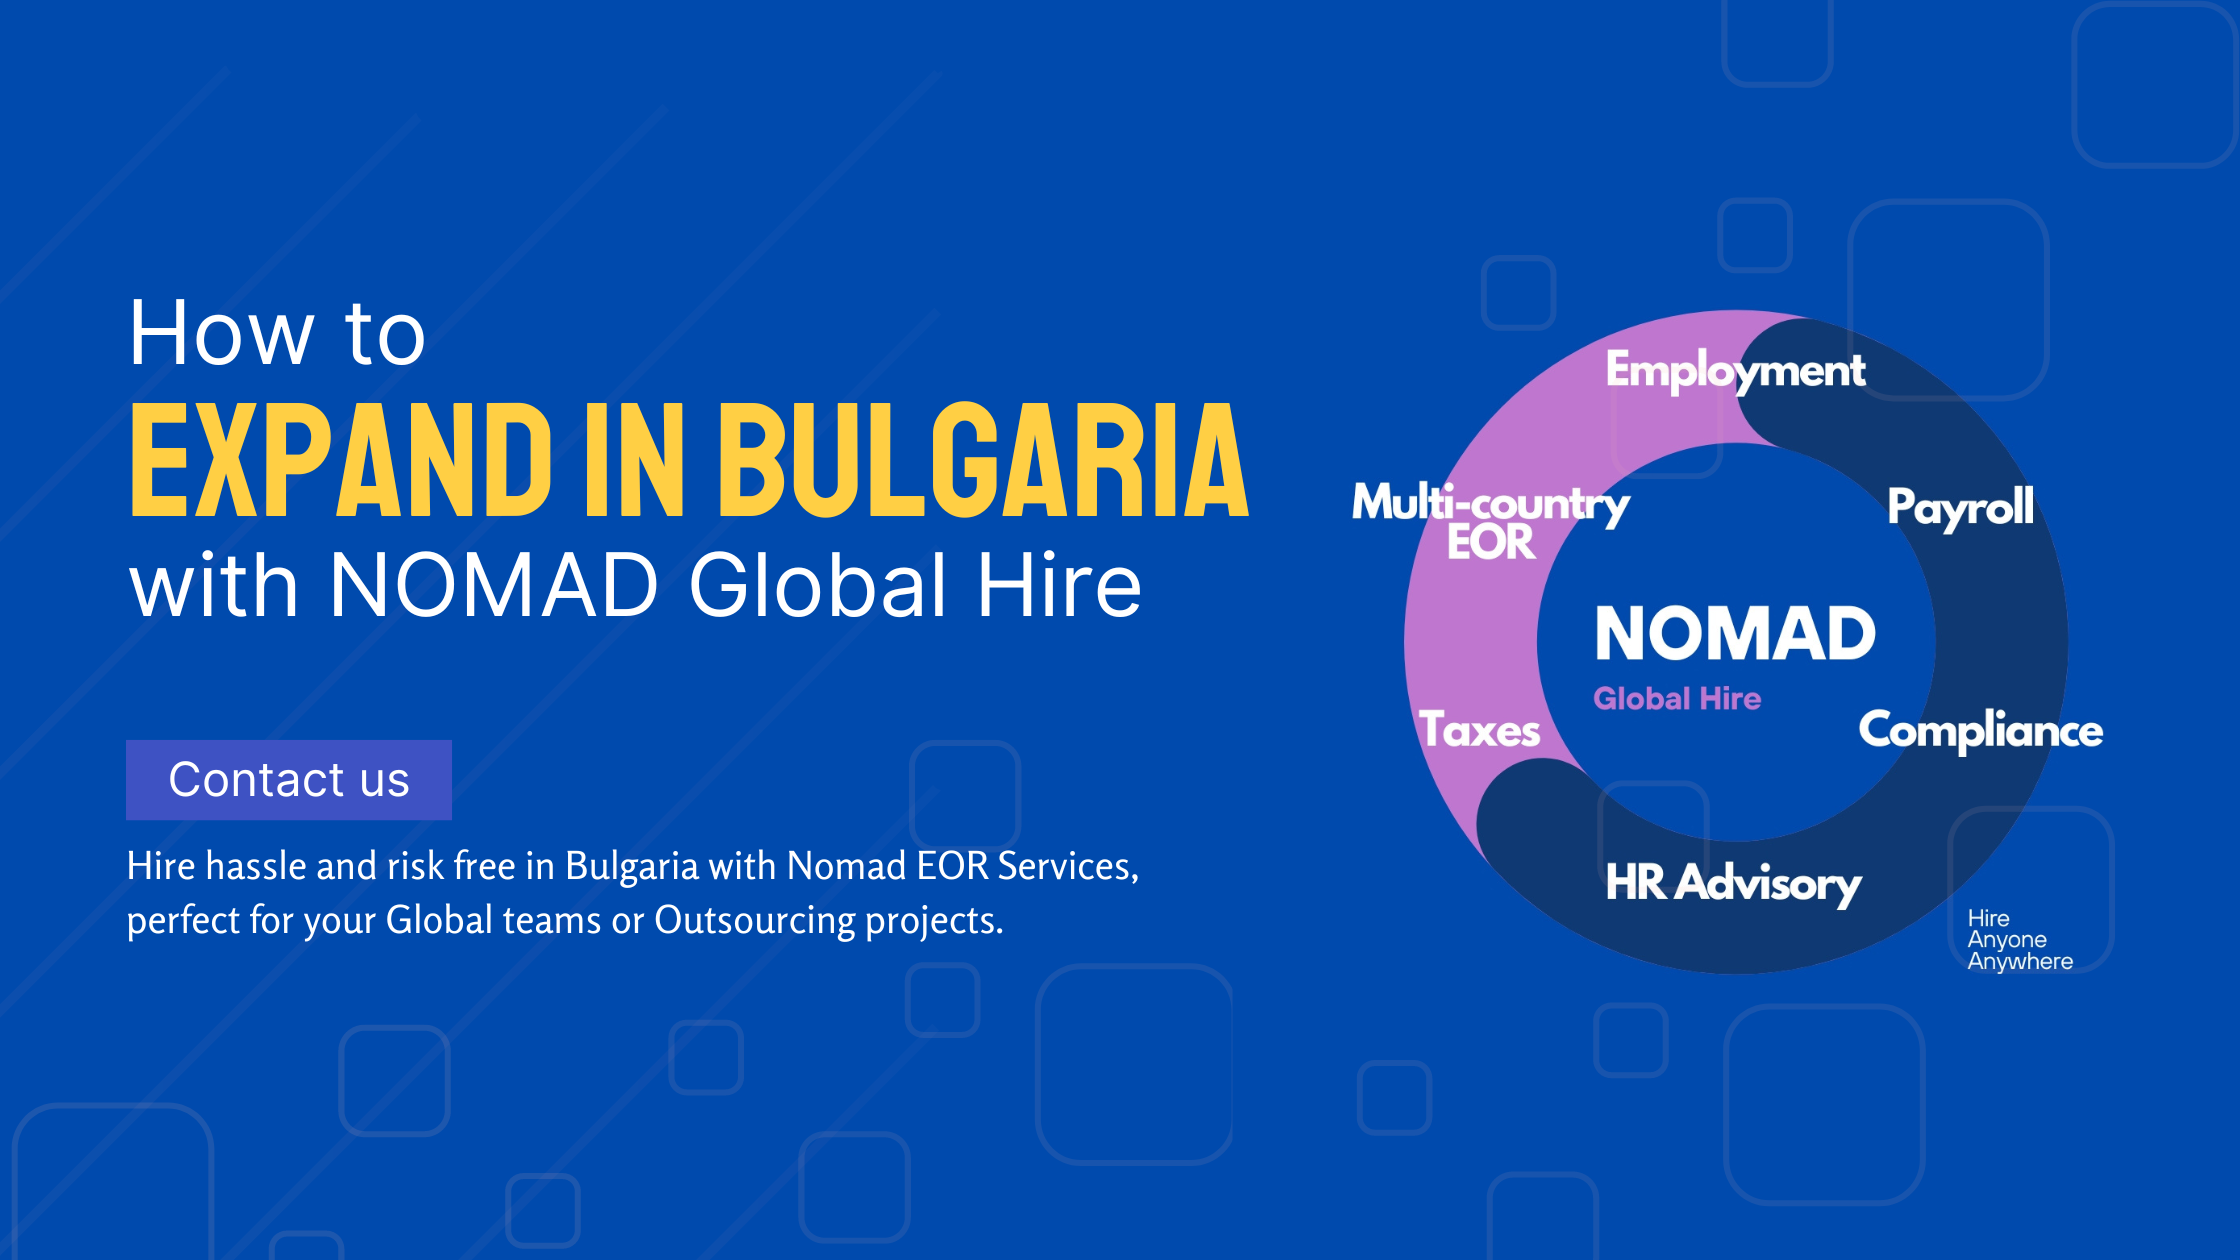 Nomad Global Hire Bulgaria